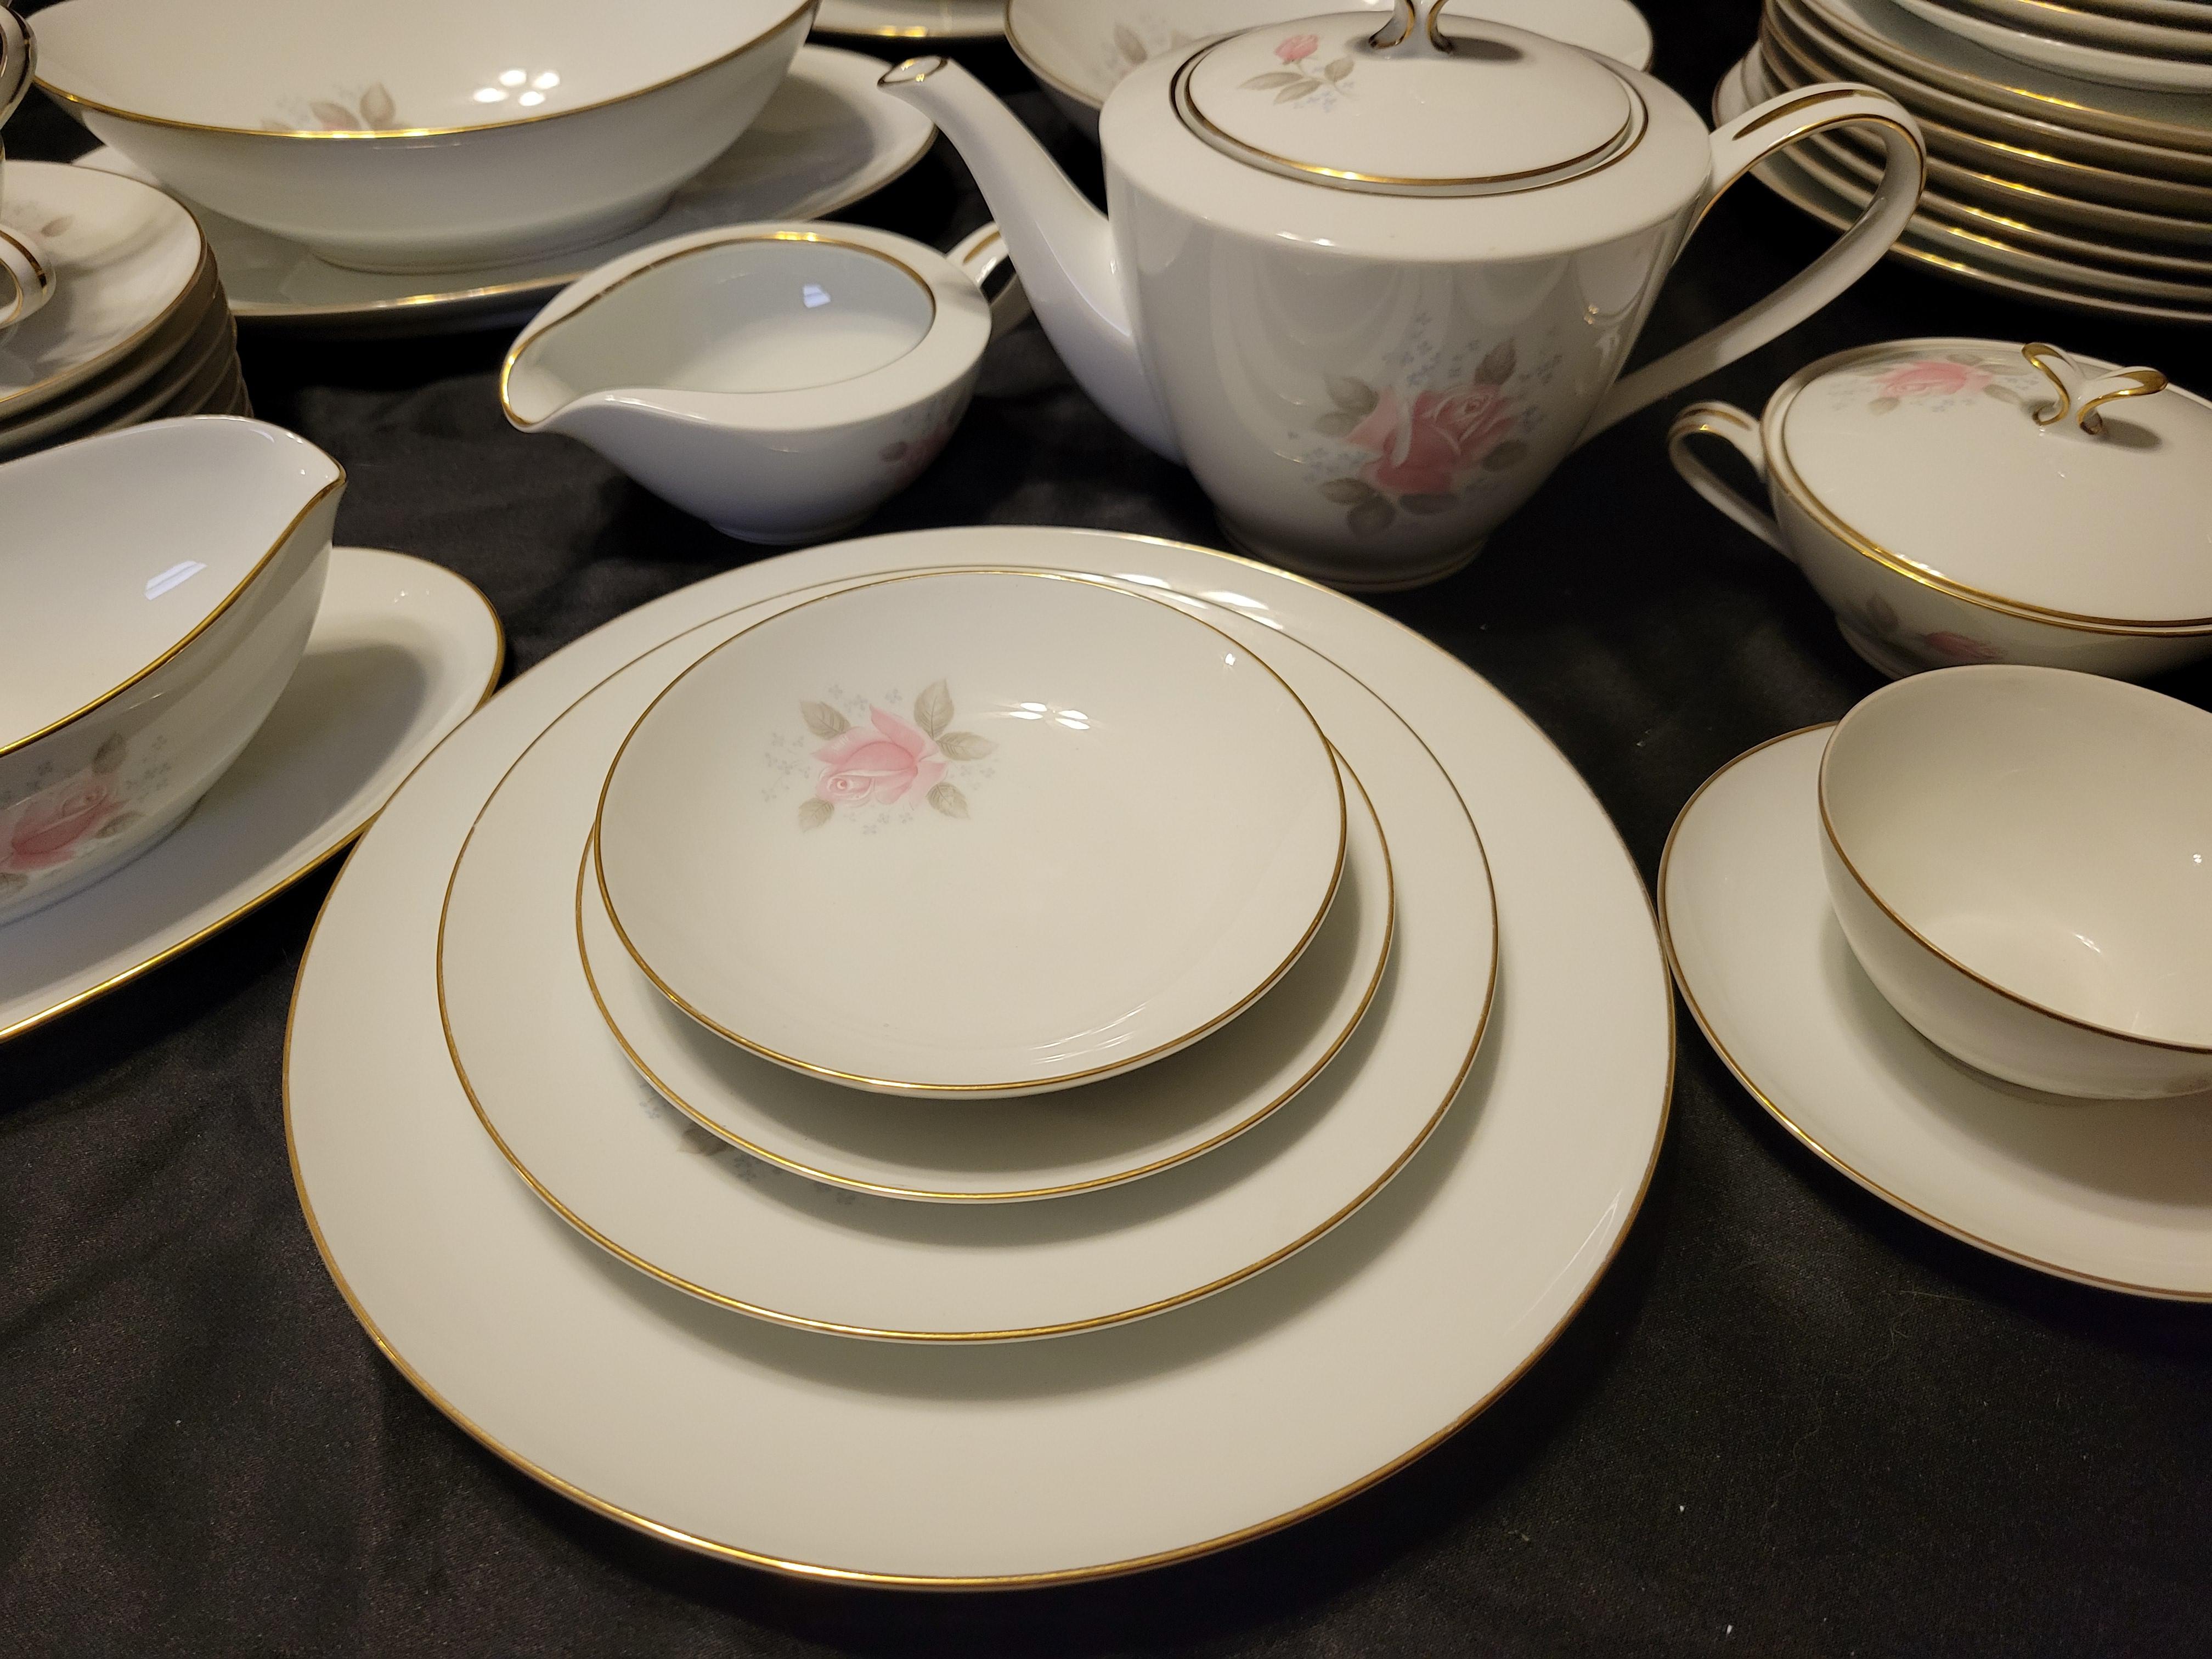 Porcelain Vintage Noritake 'Roseville' Fine China Dining Set for 8 Persons - 79 Items For Sale